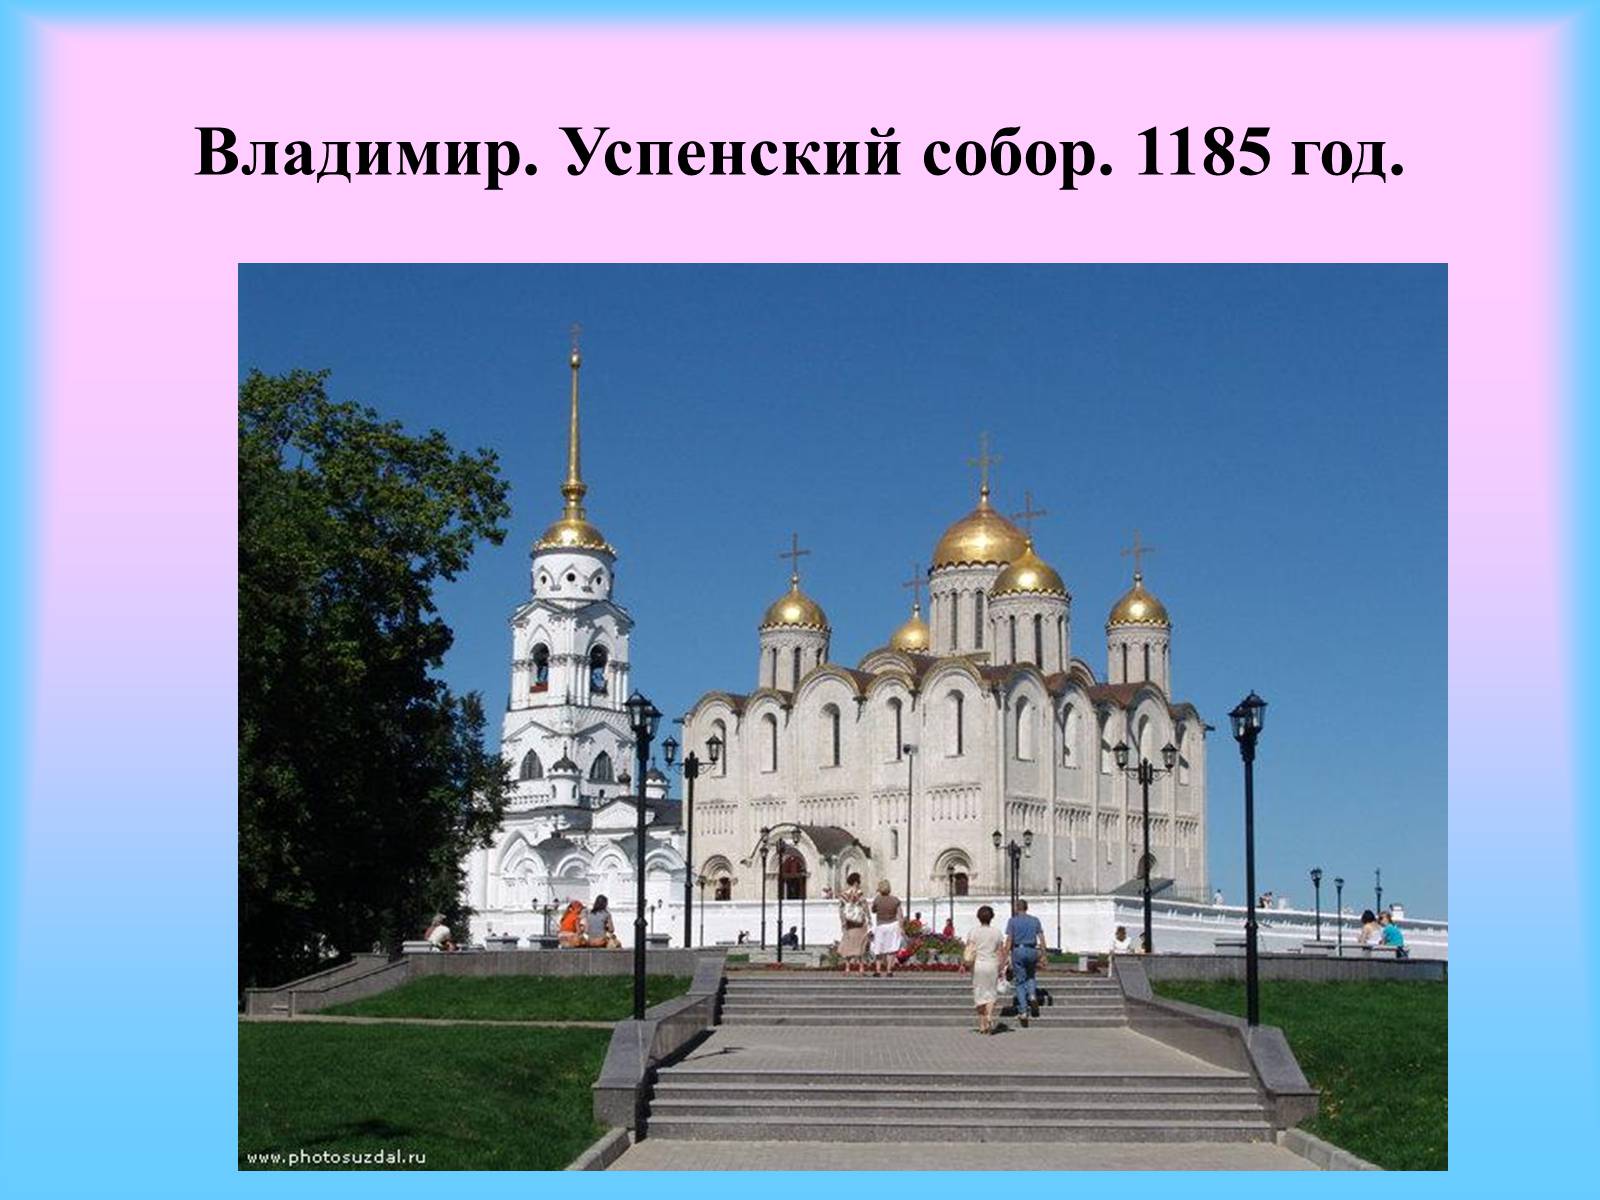 Успенский собор во Владимире архитектура